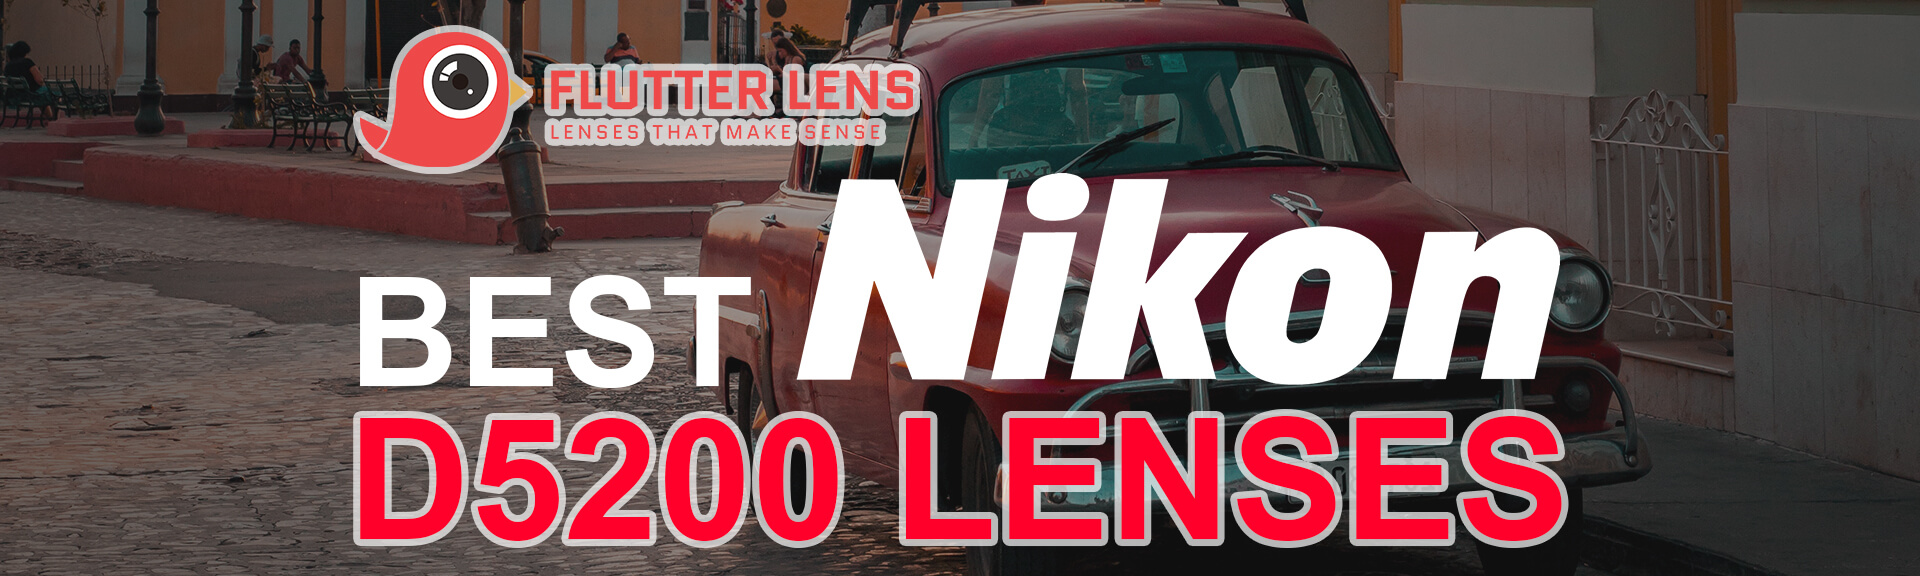 Best Nikon D5200 Lenses